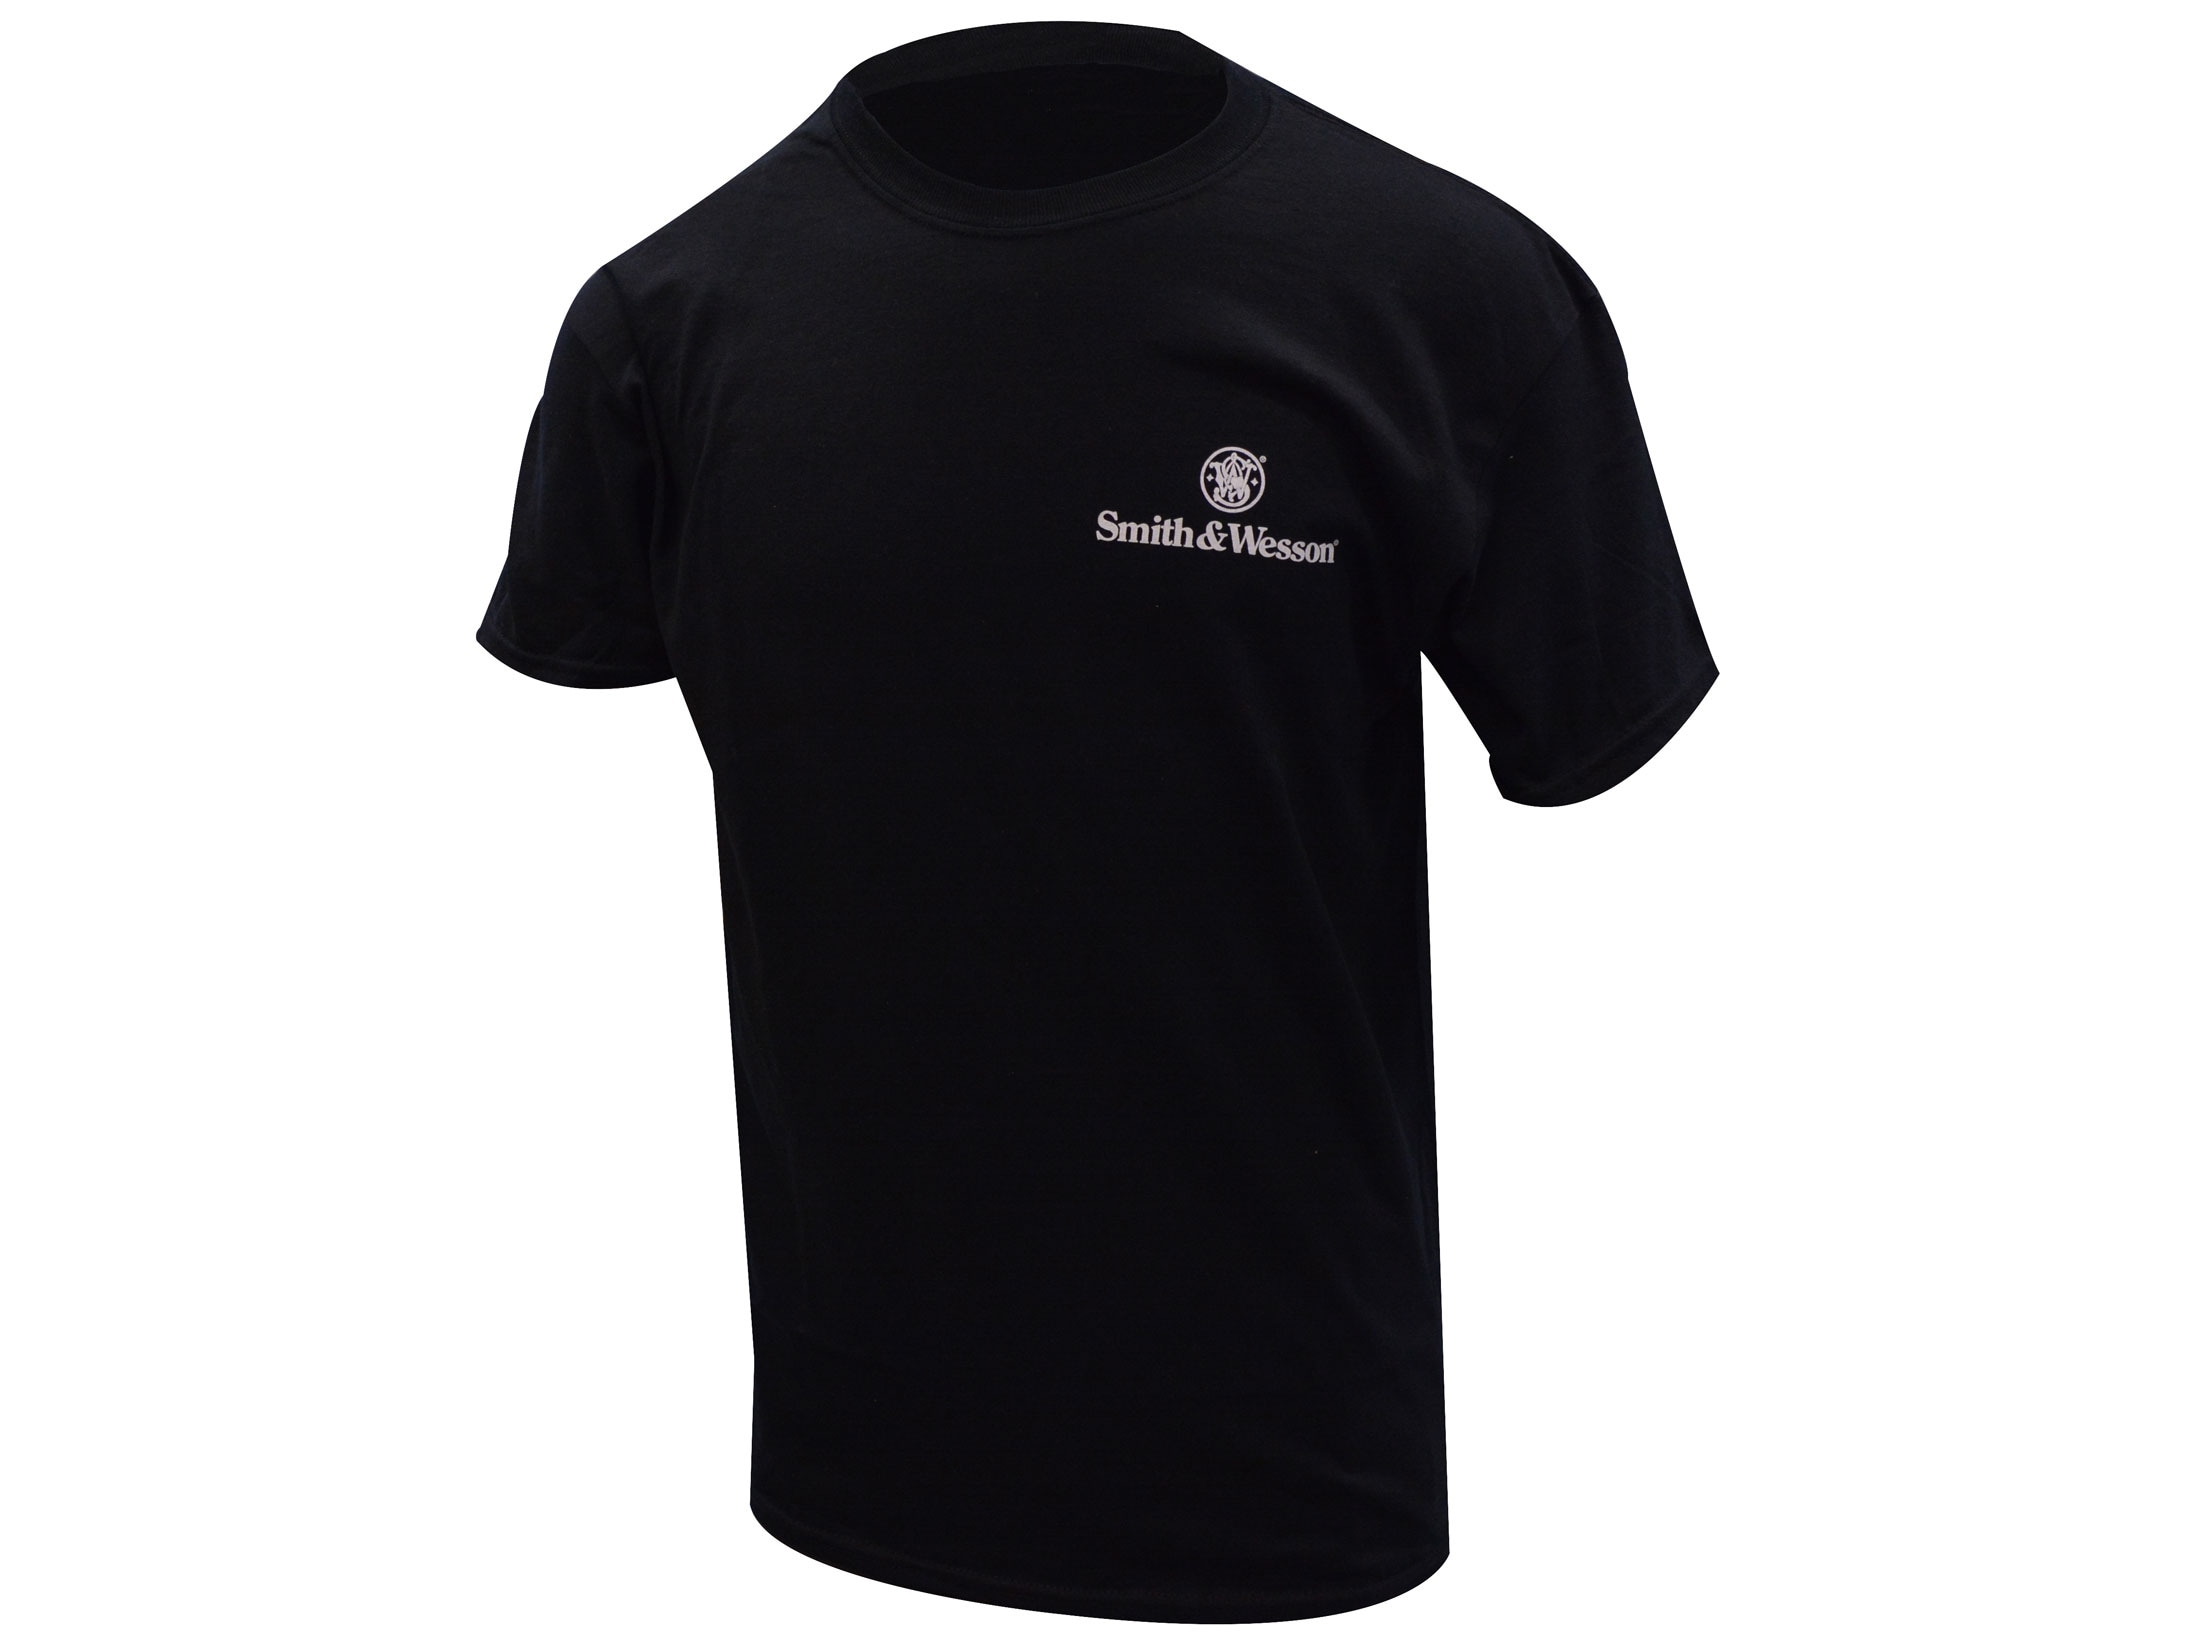 Smith & Wesson Men's Chrome Logo T-Shirt Short Sleeve Cotton Black